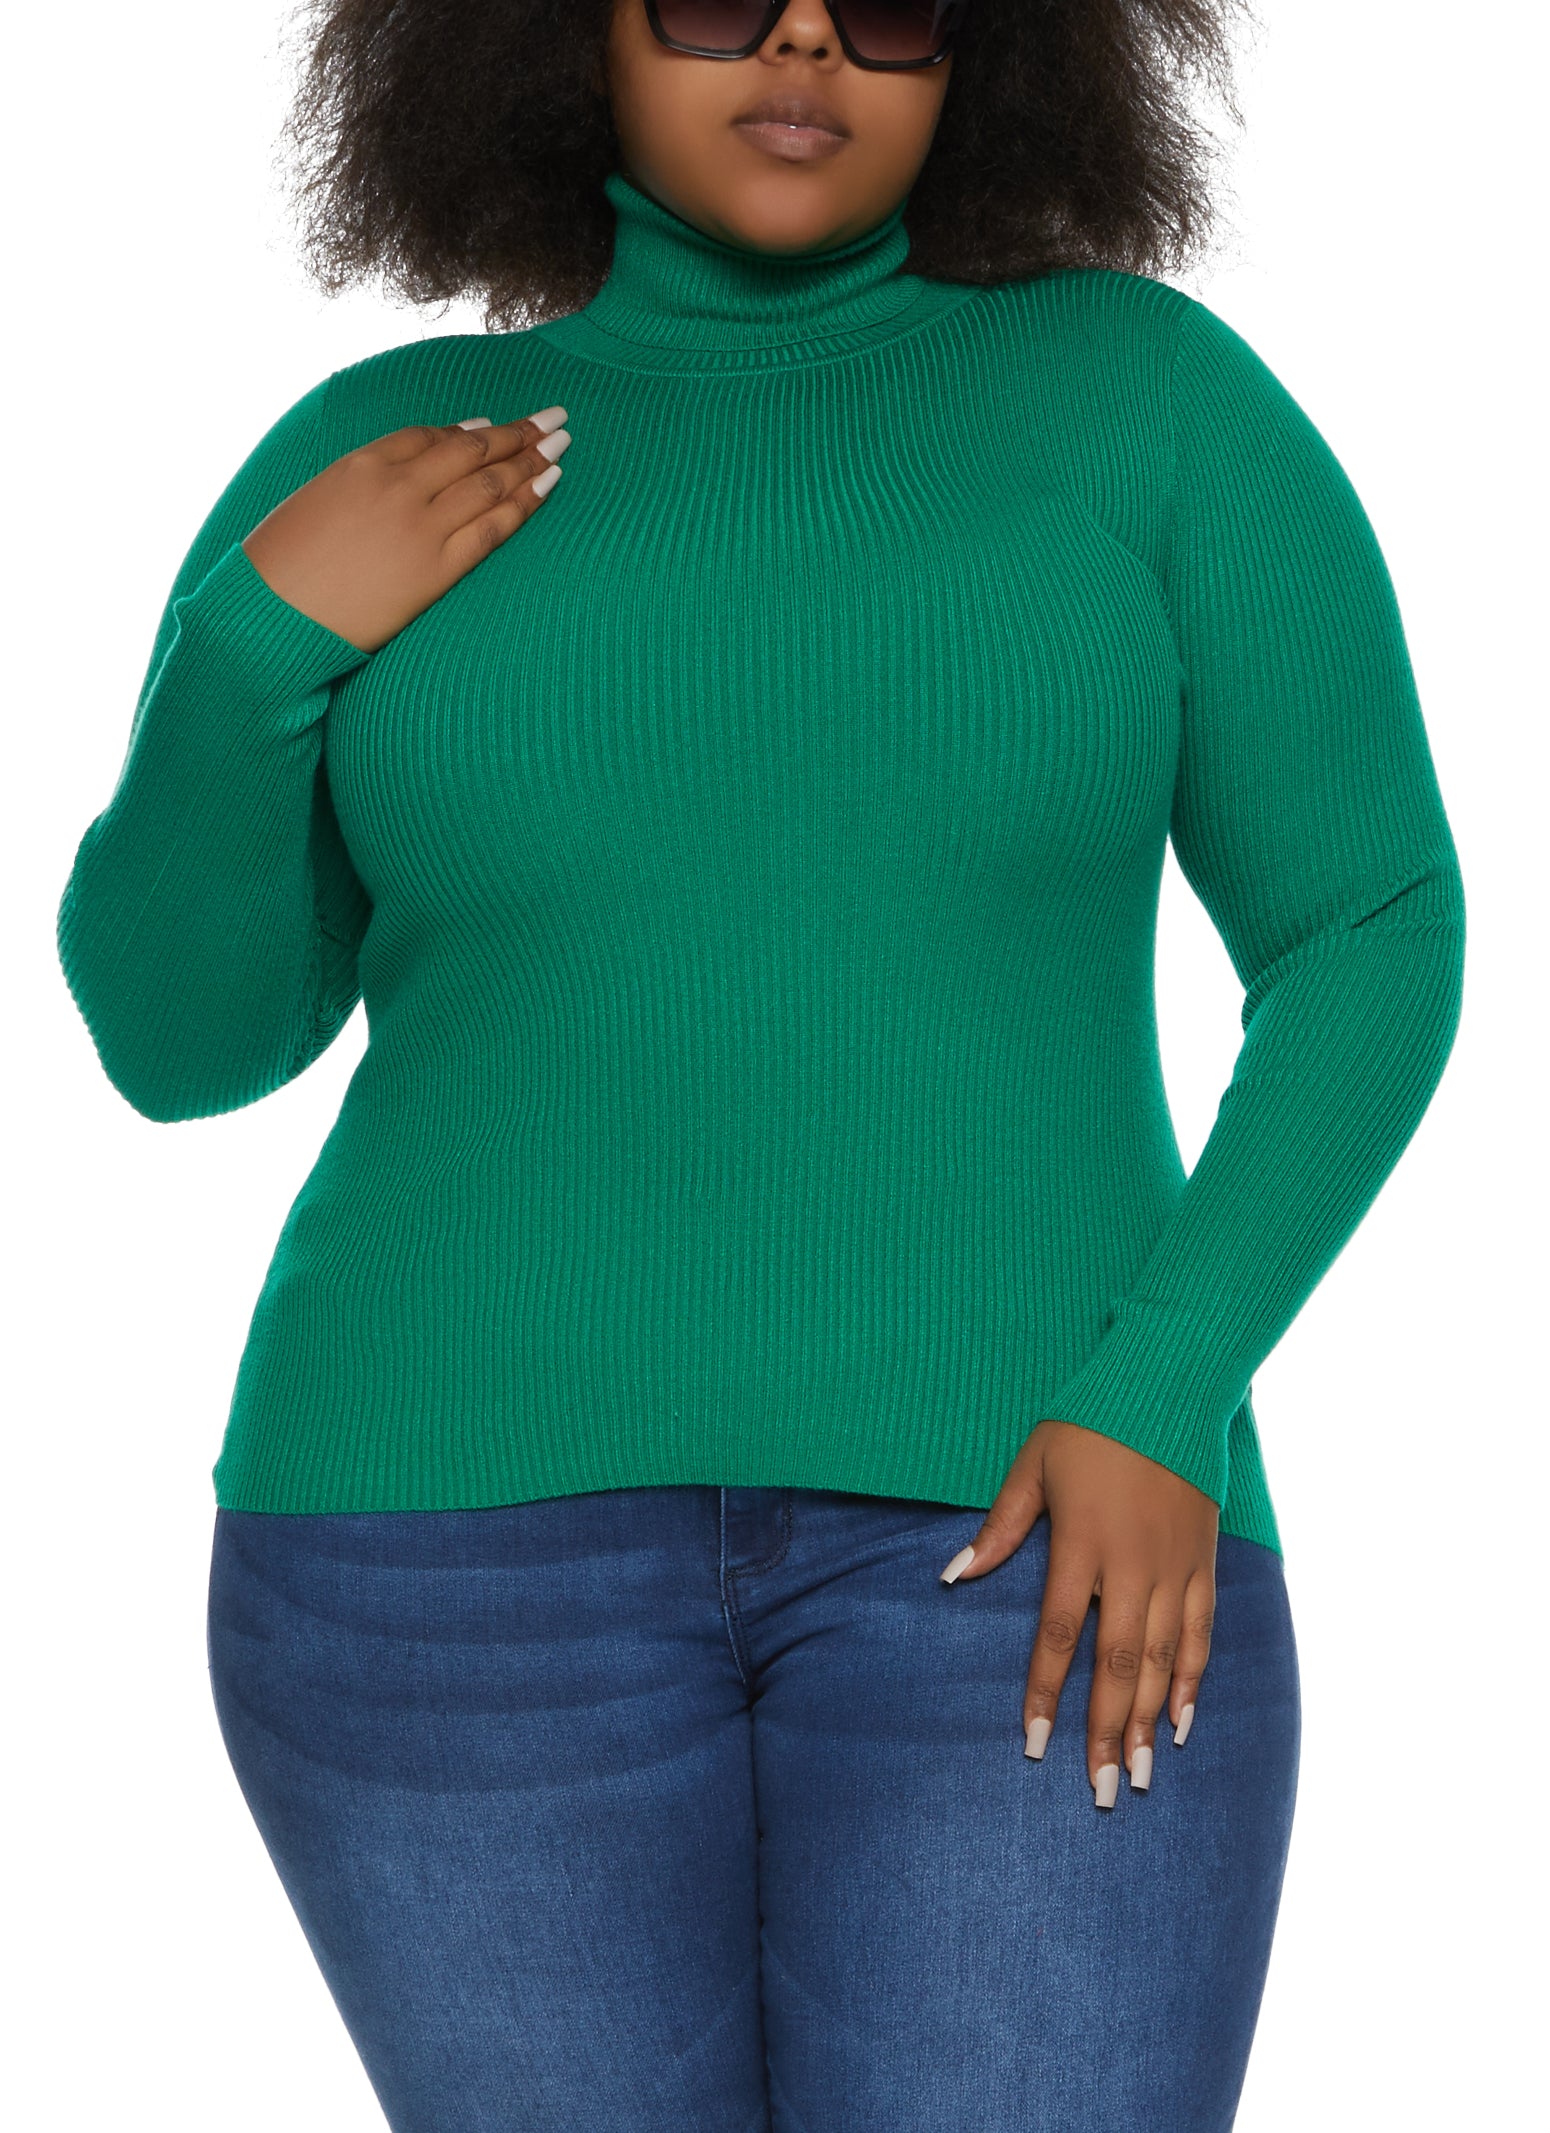 Plus Size Ribbed Turtleneck Sweater